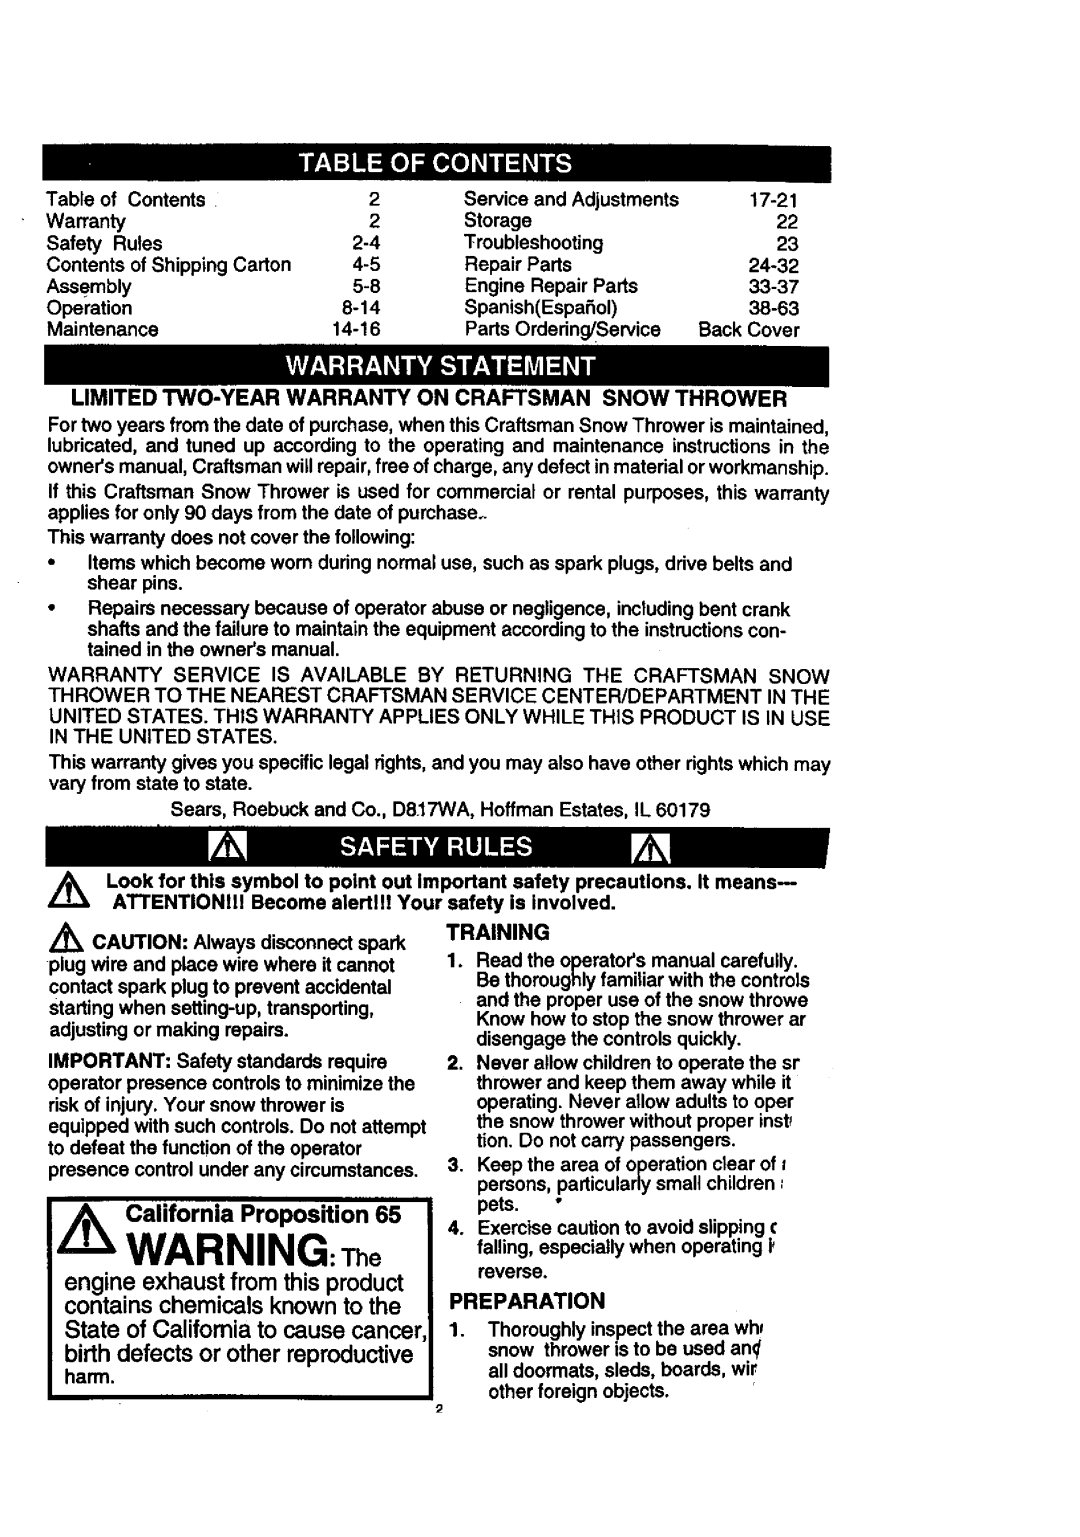 Craftsman 536.88614 manual WARNING: Tho, California Proposition, Training, Preparation 